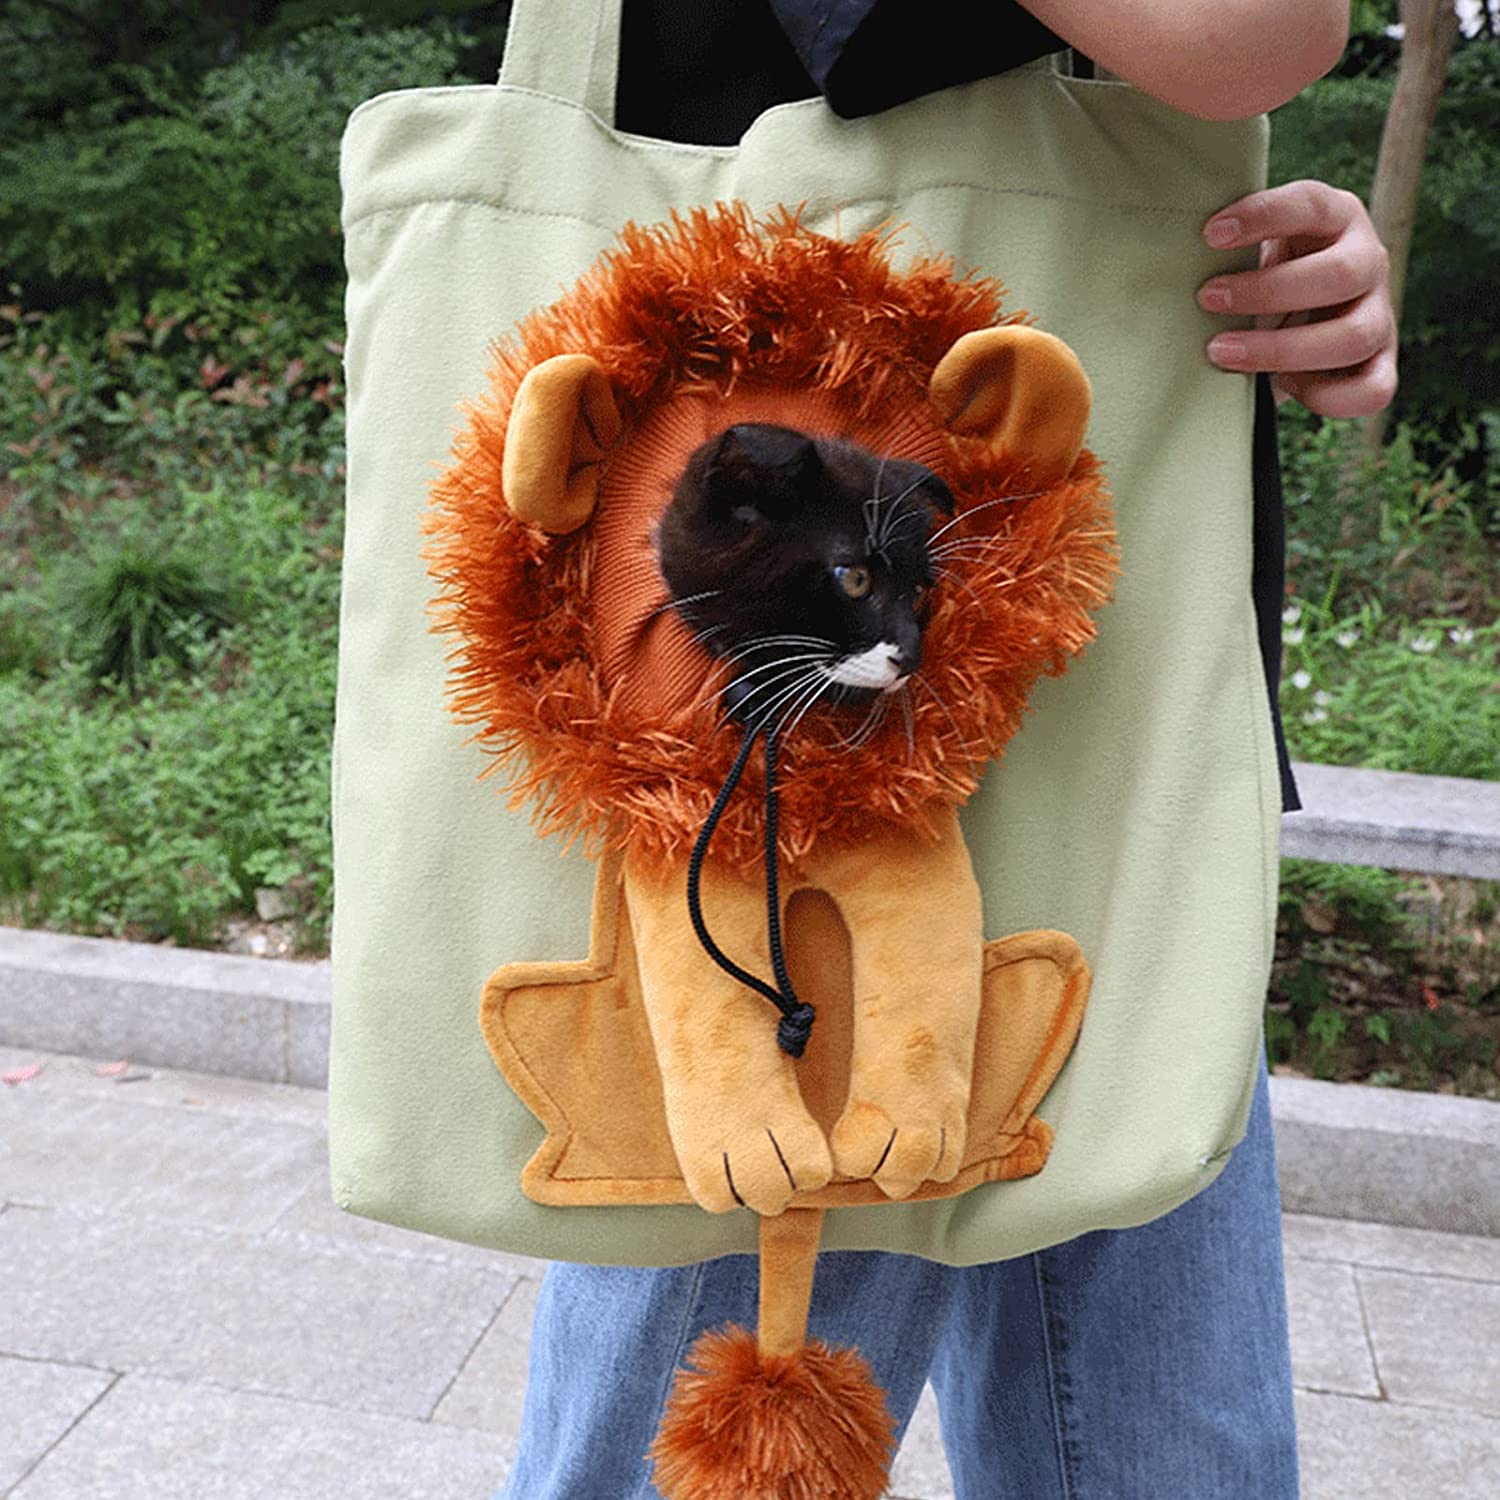 Creative Cats Carrier Bag With Lion Head Design Canvas Handbag With Hole  Pet Cat Carrier Puppy Dog Carrier single shoulder Bag